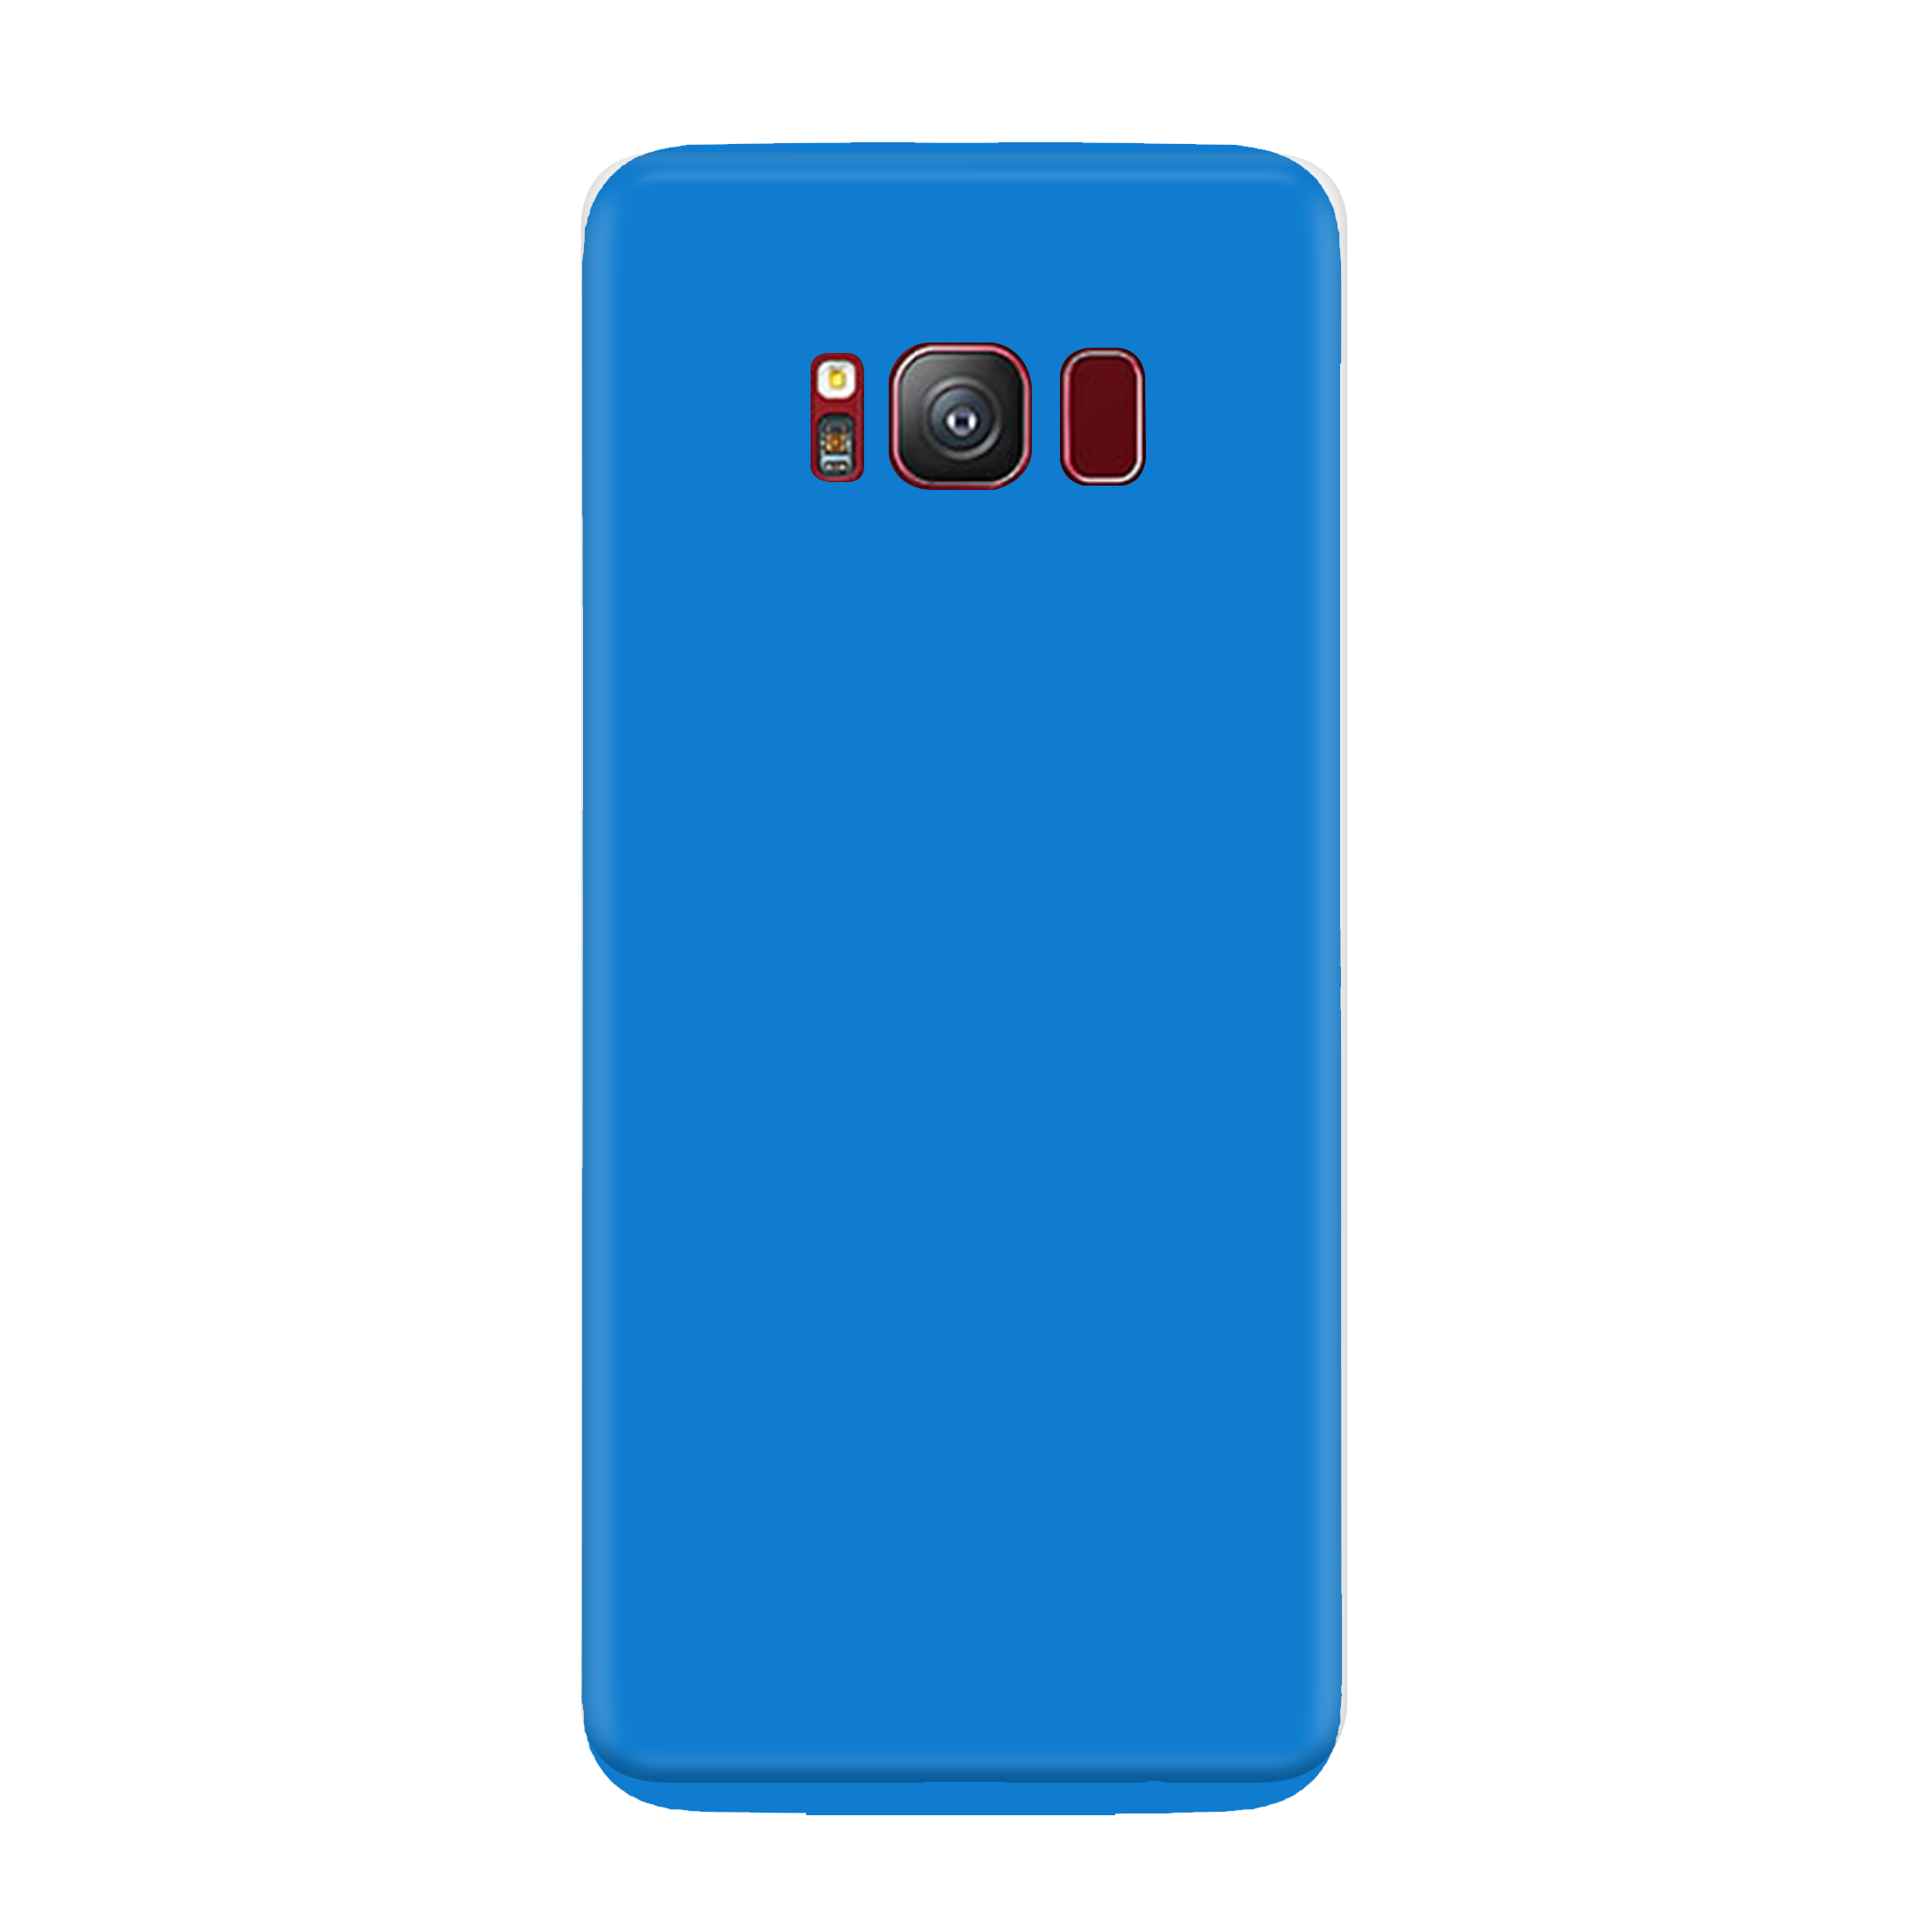 Matte Blue Skin for Samsung S8 Plus